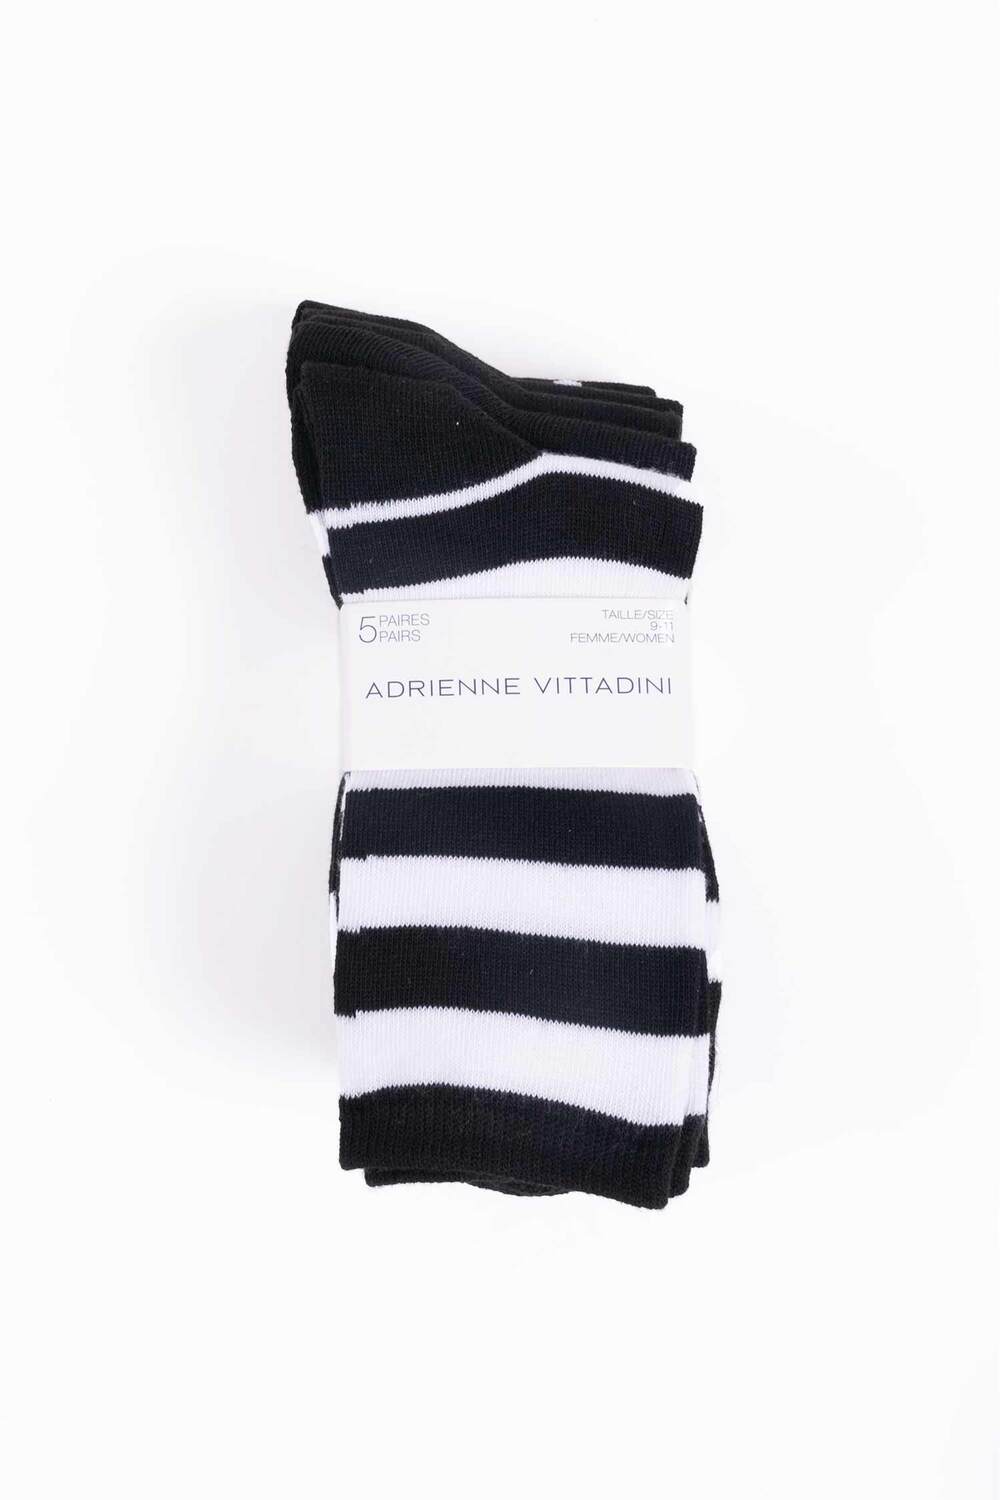 Adrienne Vittadini - Fine-knit cotton dress socks - 5 pairs. Colour: black.  Size: 9-11